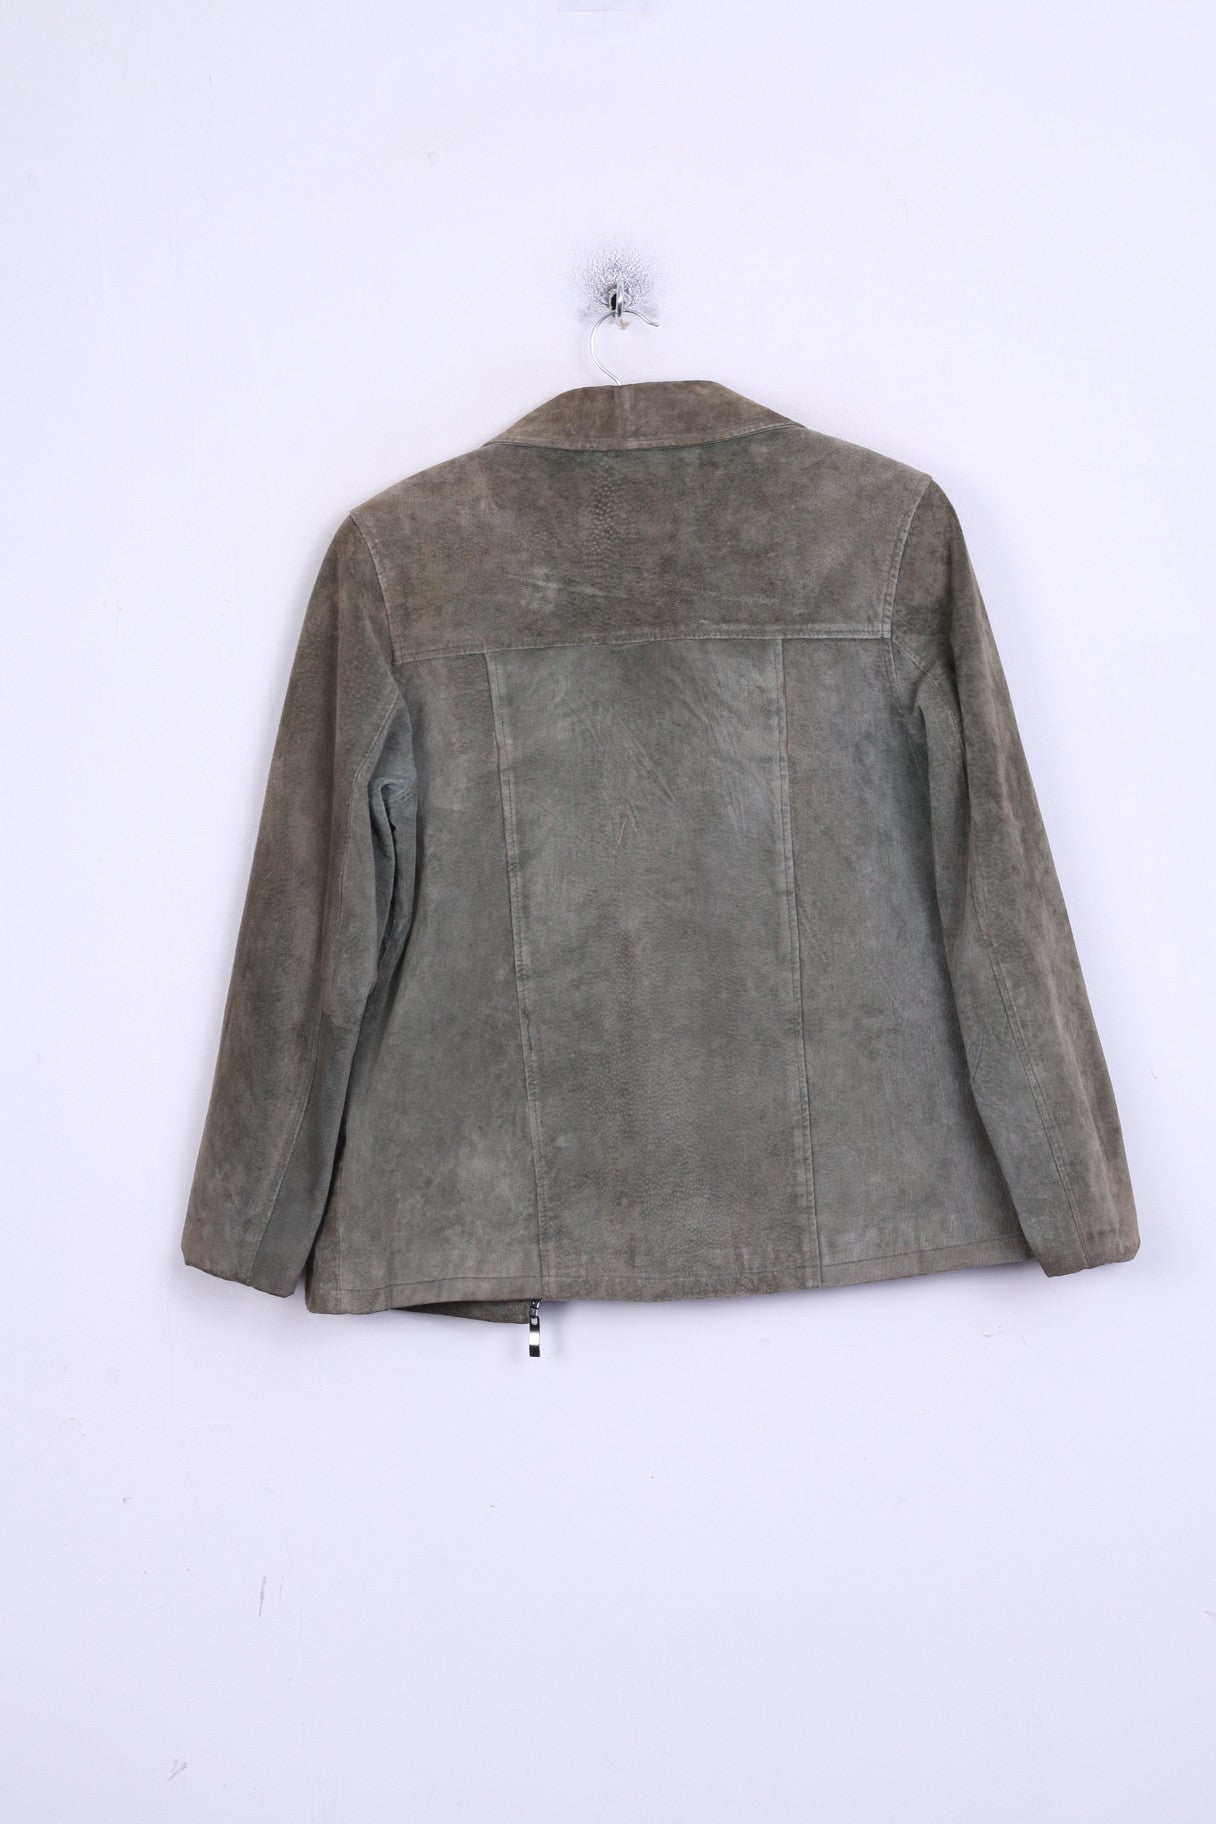 JACLYN SMITH Classic Womens S Jacket Leather Khaki Full Zip